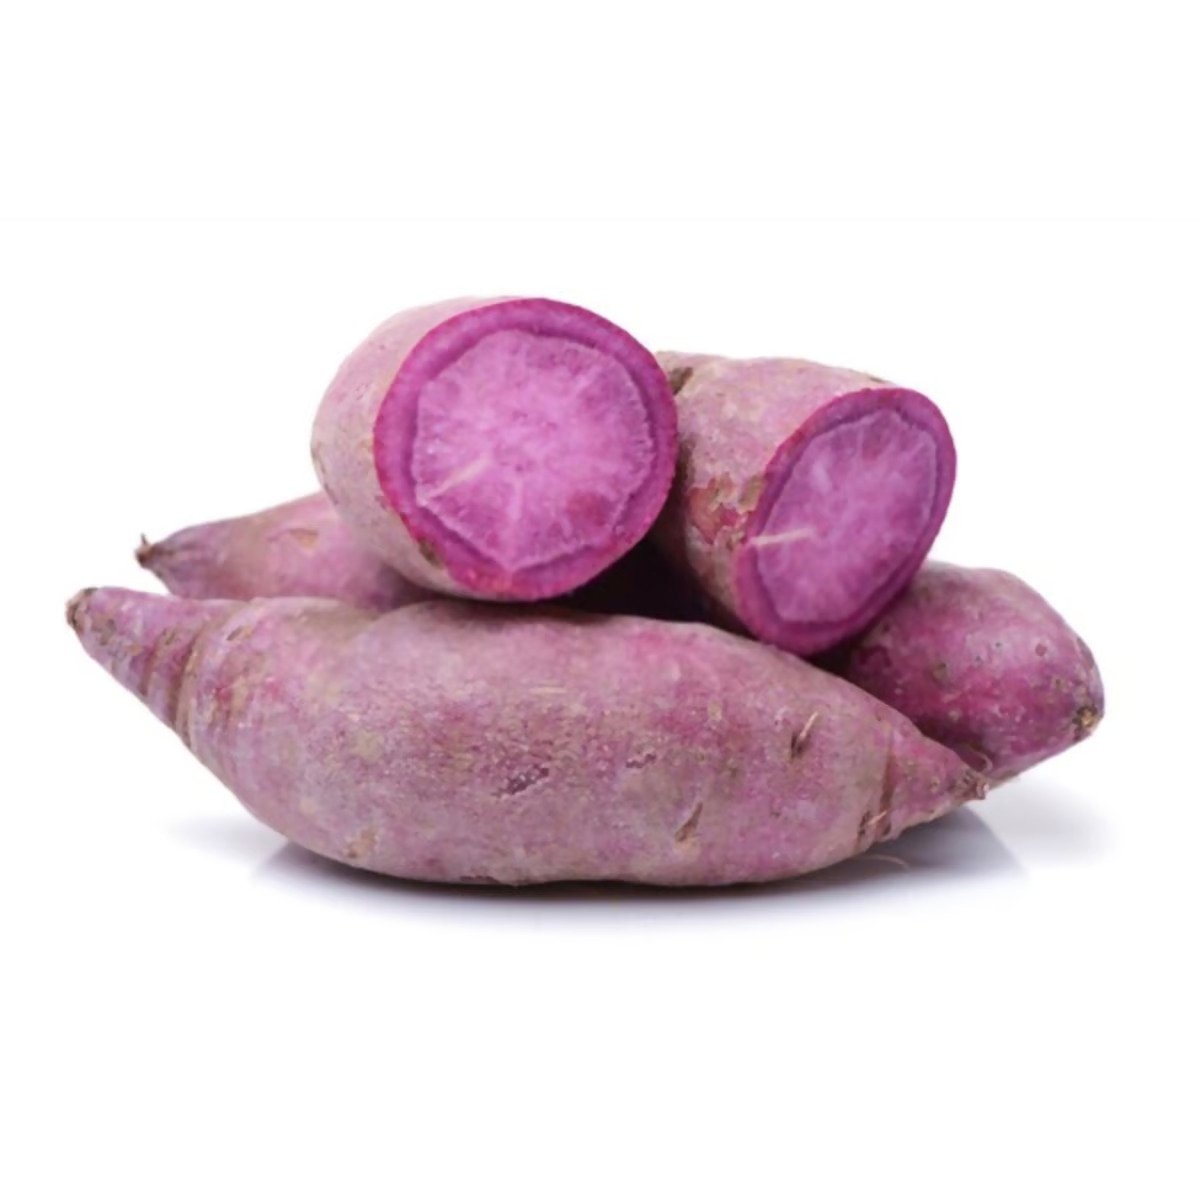 Sweet Potato Purple 500g Approx Weight Kg